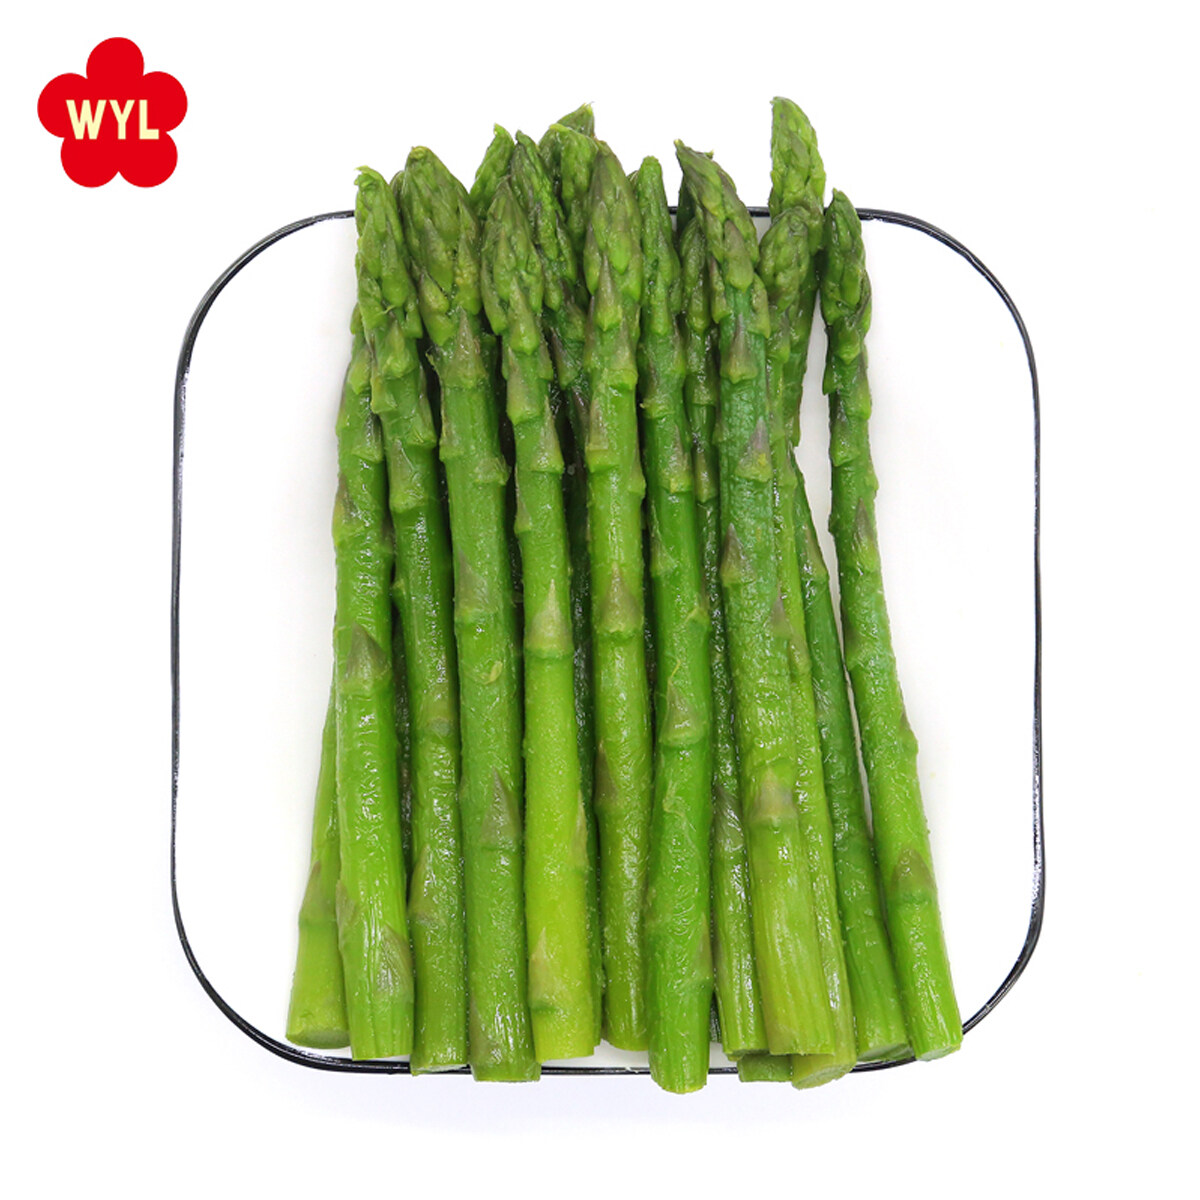 Custom iqf frozen asparagus, Supply sinocharm frozen asparagus bean, frozen asparagus spear cuts and tips Factory, green asparagus frozen Manufacturer, iqf frozen asparagus